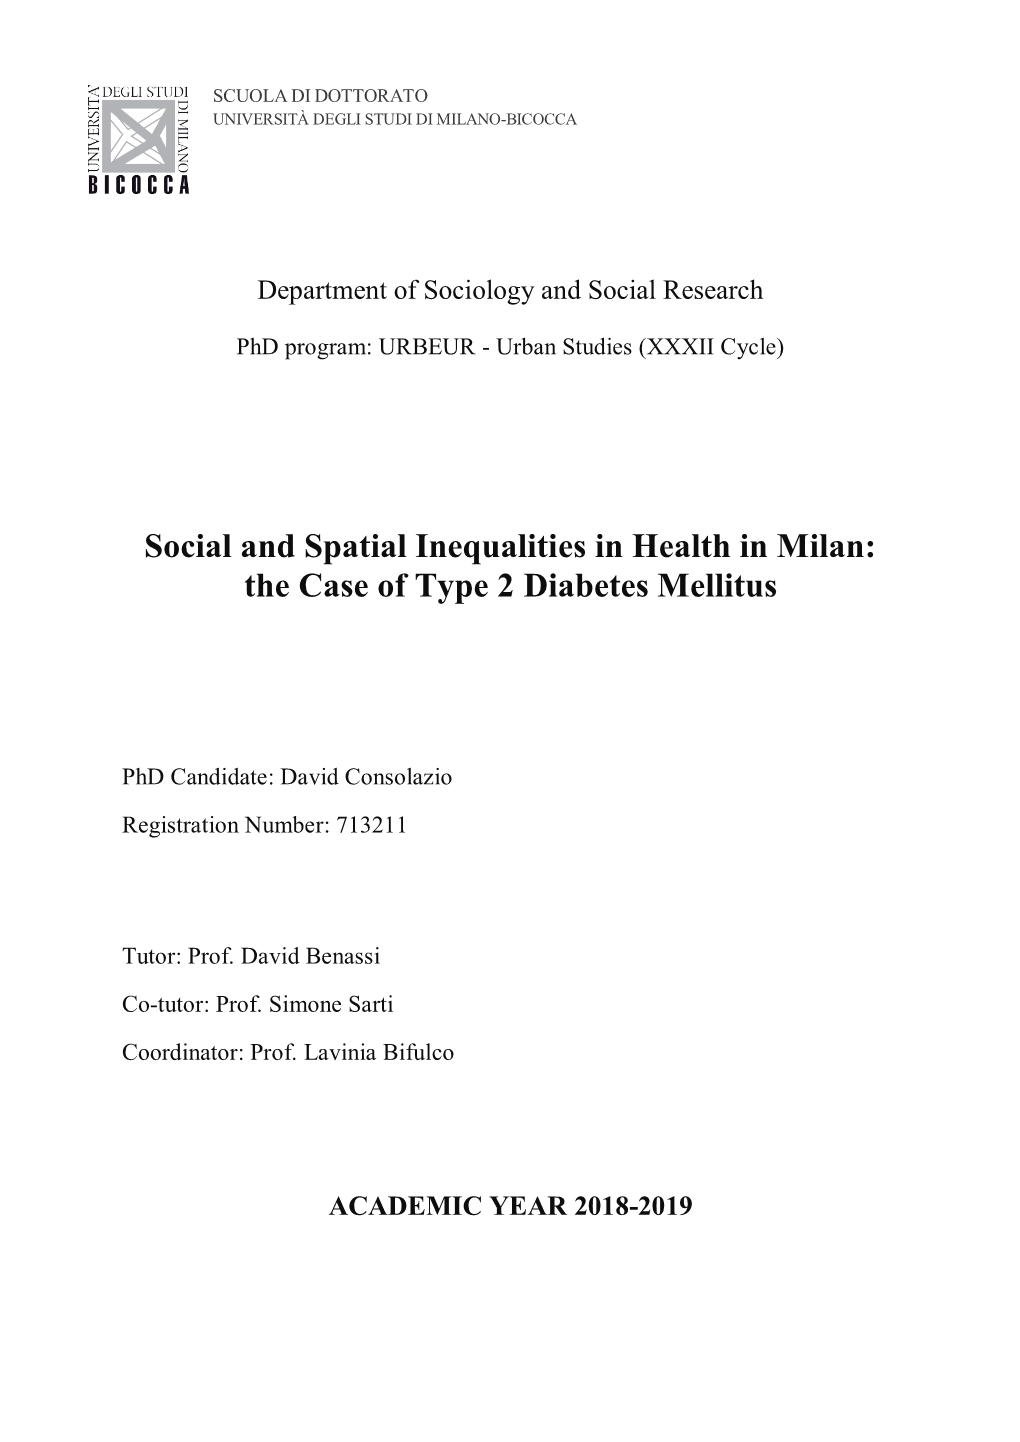 Social and Spatial Inequalities in Health in Milan: the Case of Type 2 Diabetes Mellitus